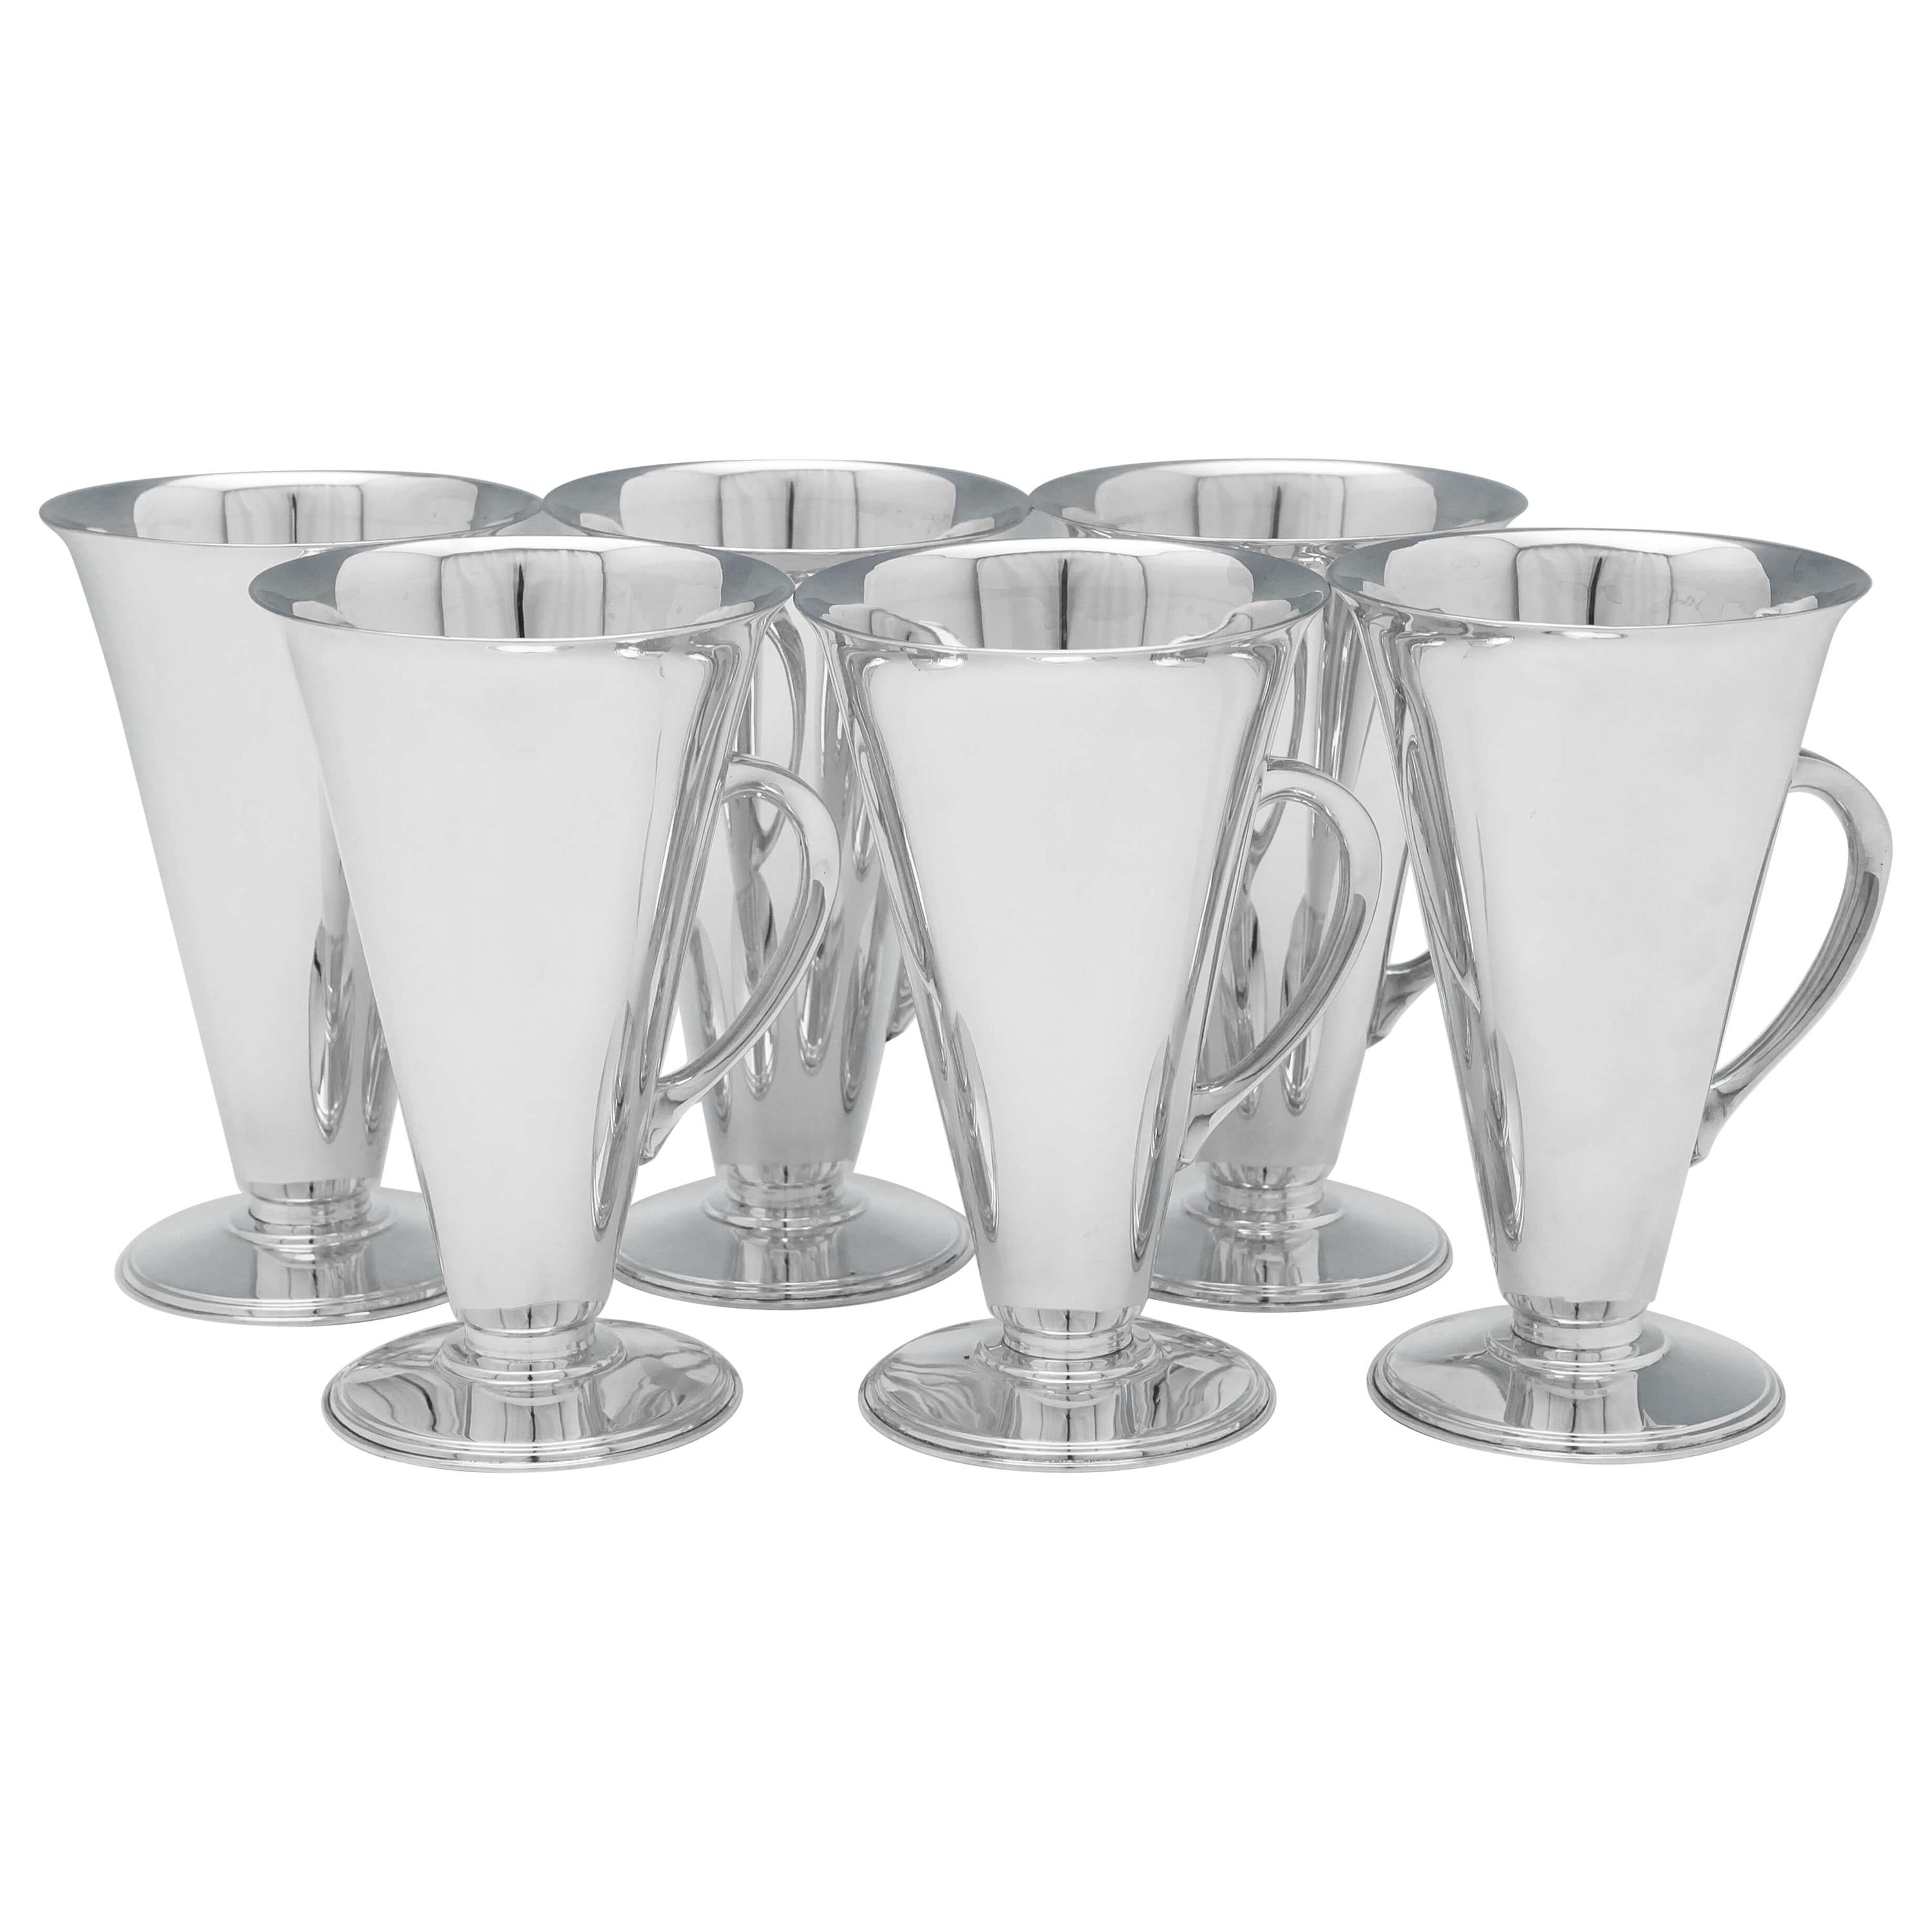 Art Deco Design Sterling Silver Set of 6 Mint Julep Cups by Asprey & Co. 1936